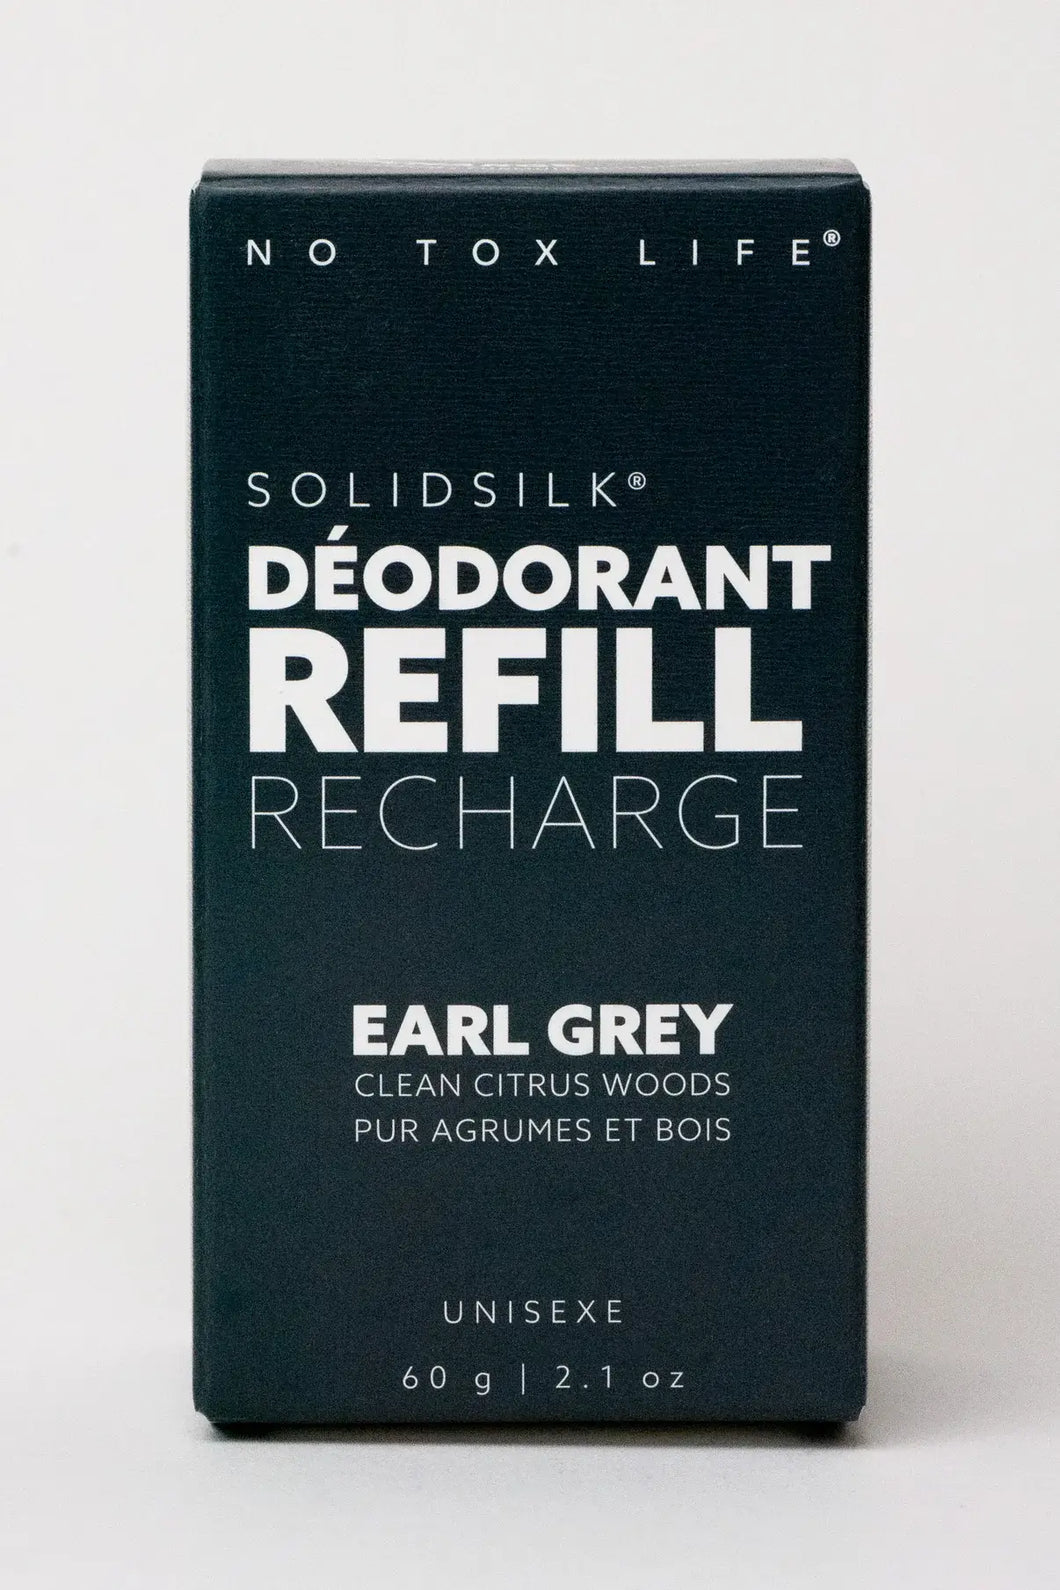 SOLIDSILK® Deodorant Refill Capsule